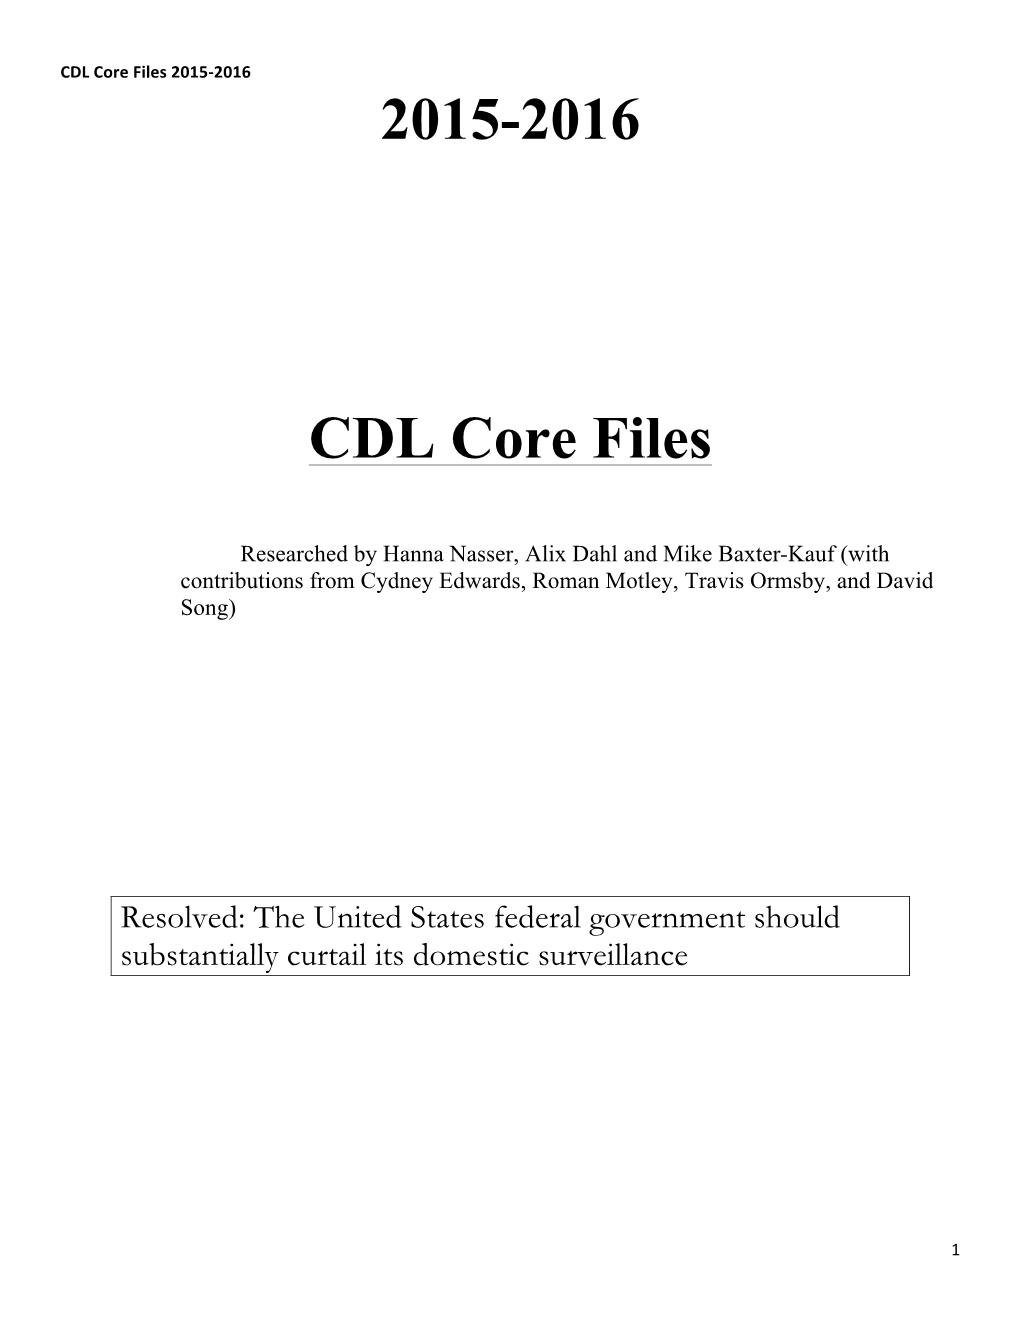 2015-2016 CDL Core Files